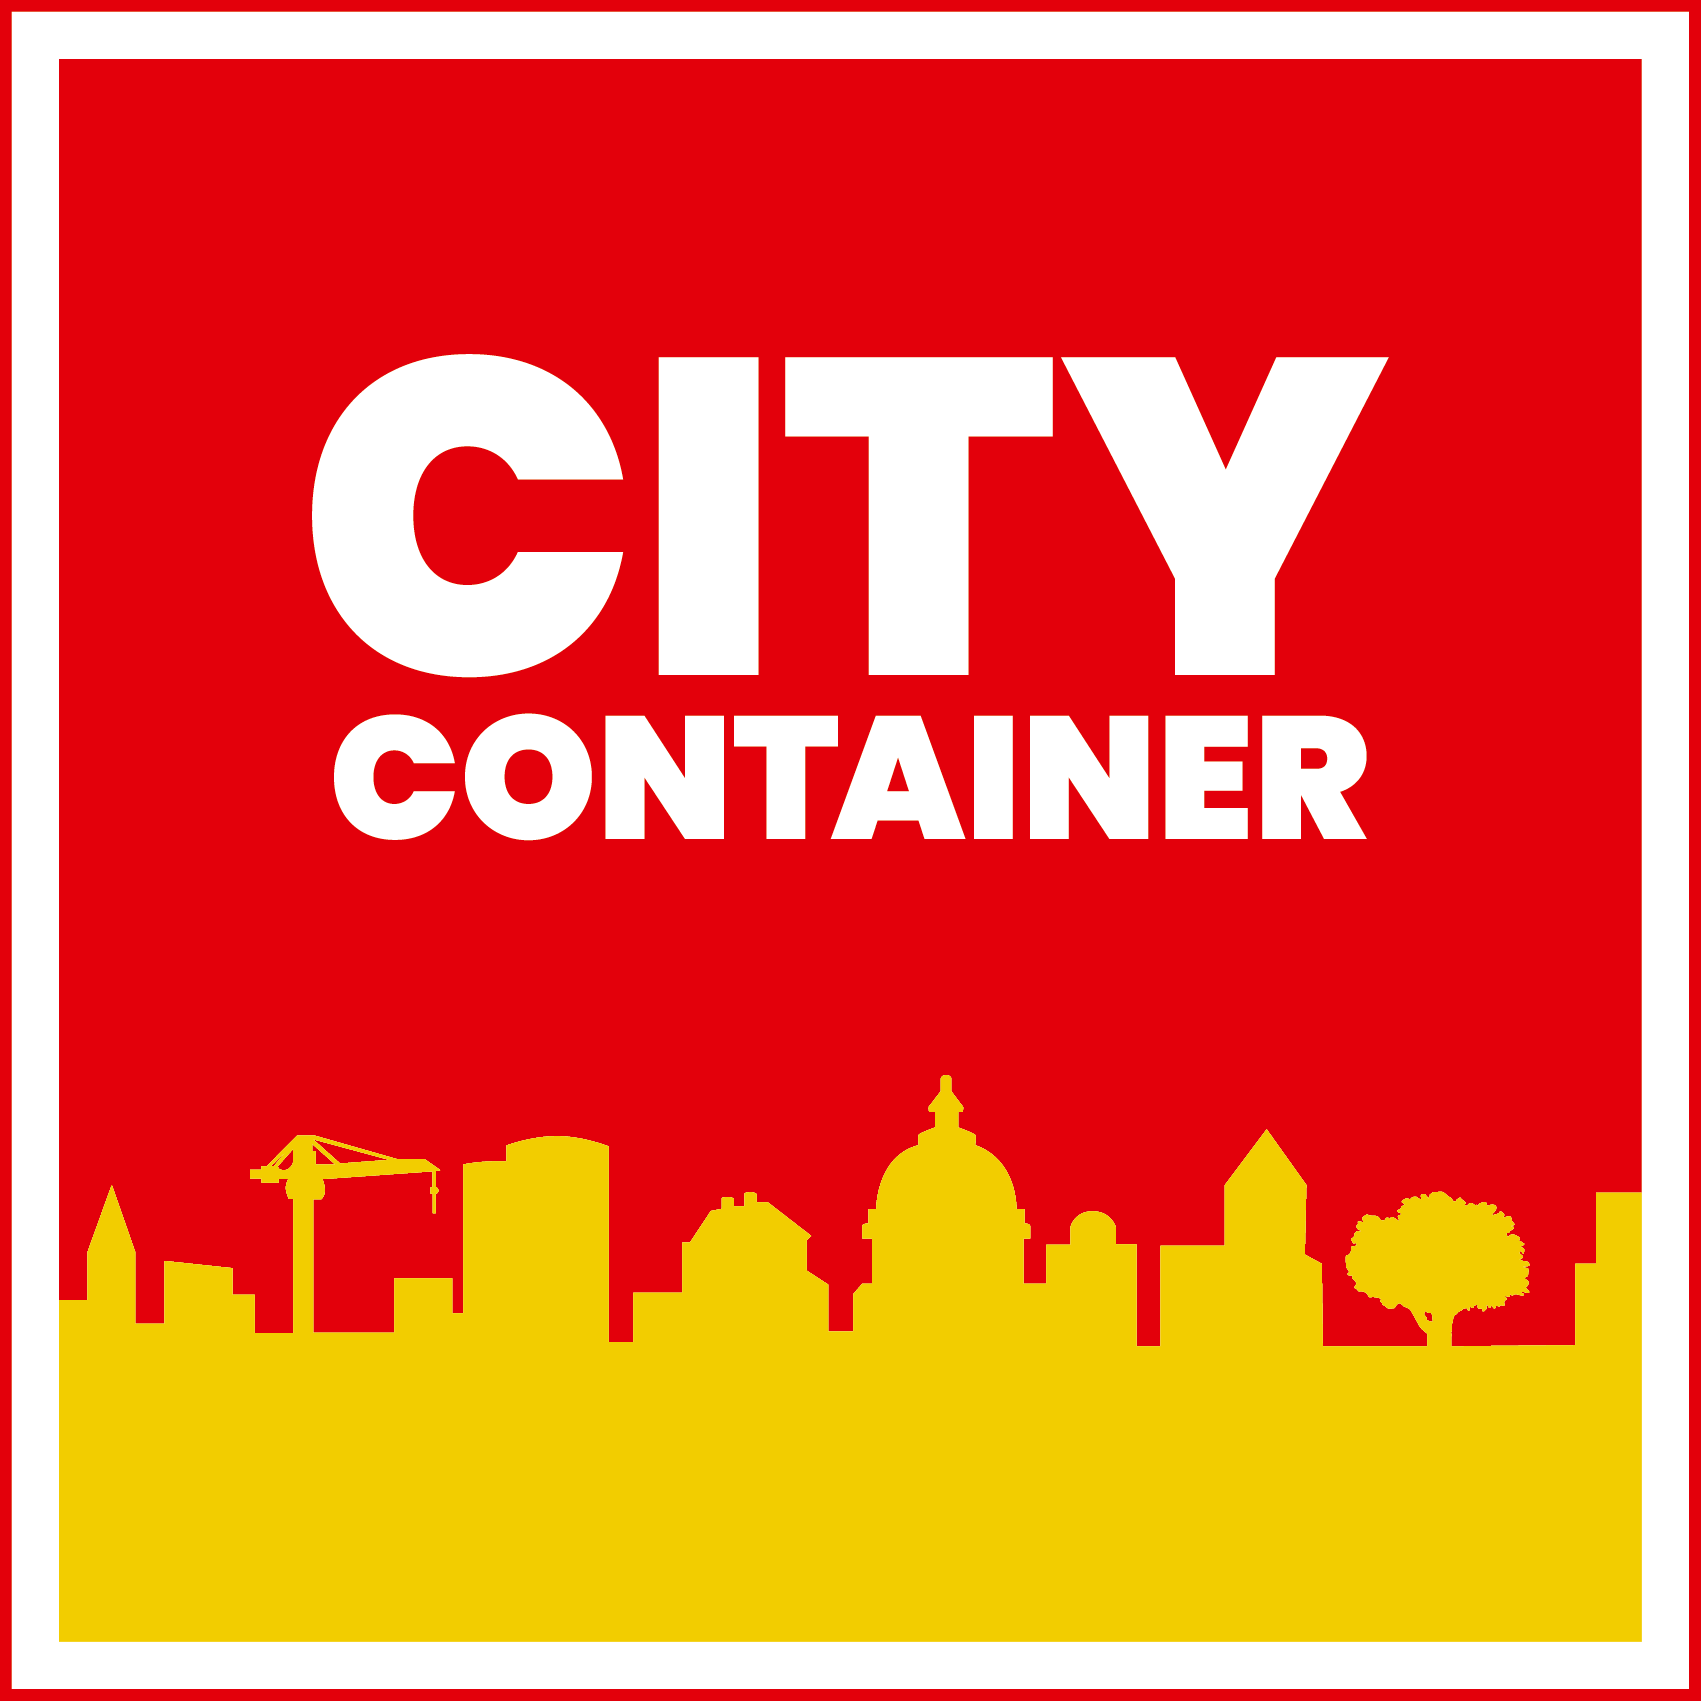 City Container logo